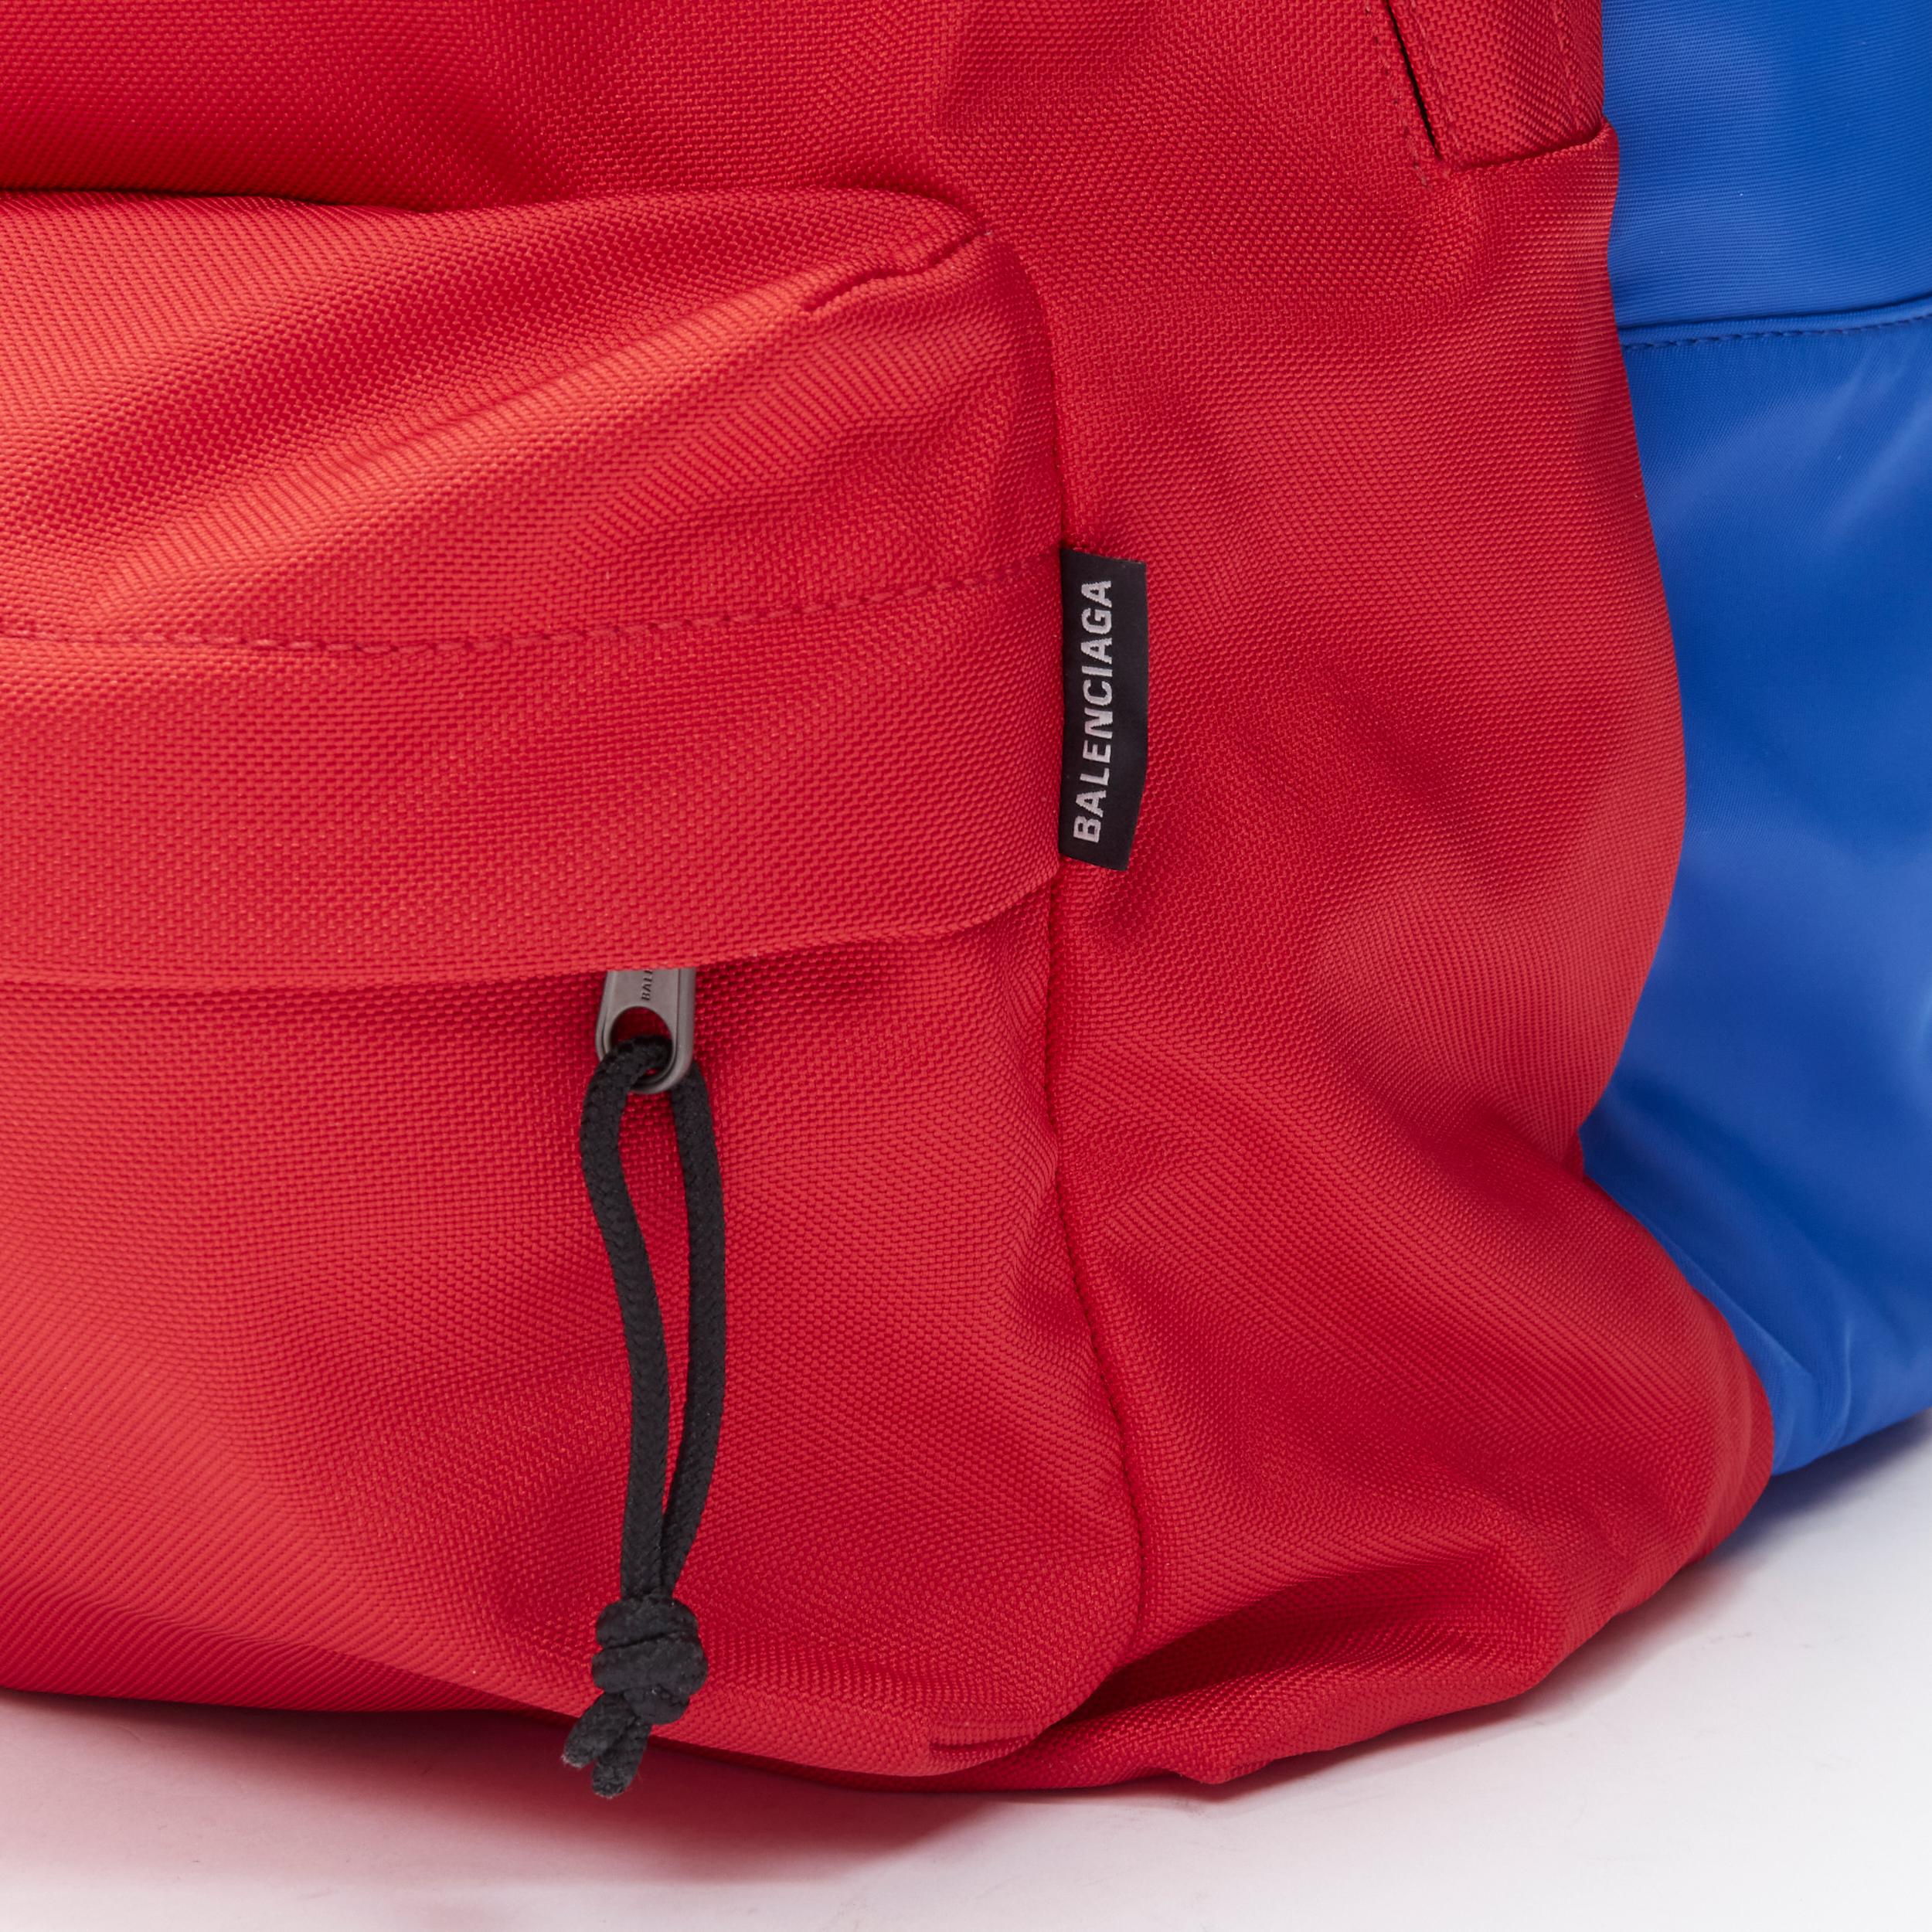 Men's new BALENCIAGA Double Backpack red blue nylon layered monogram jacquard bag